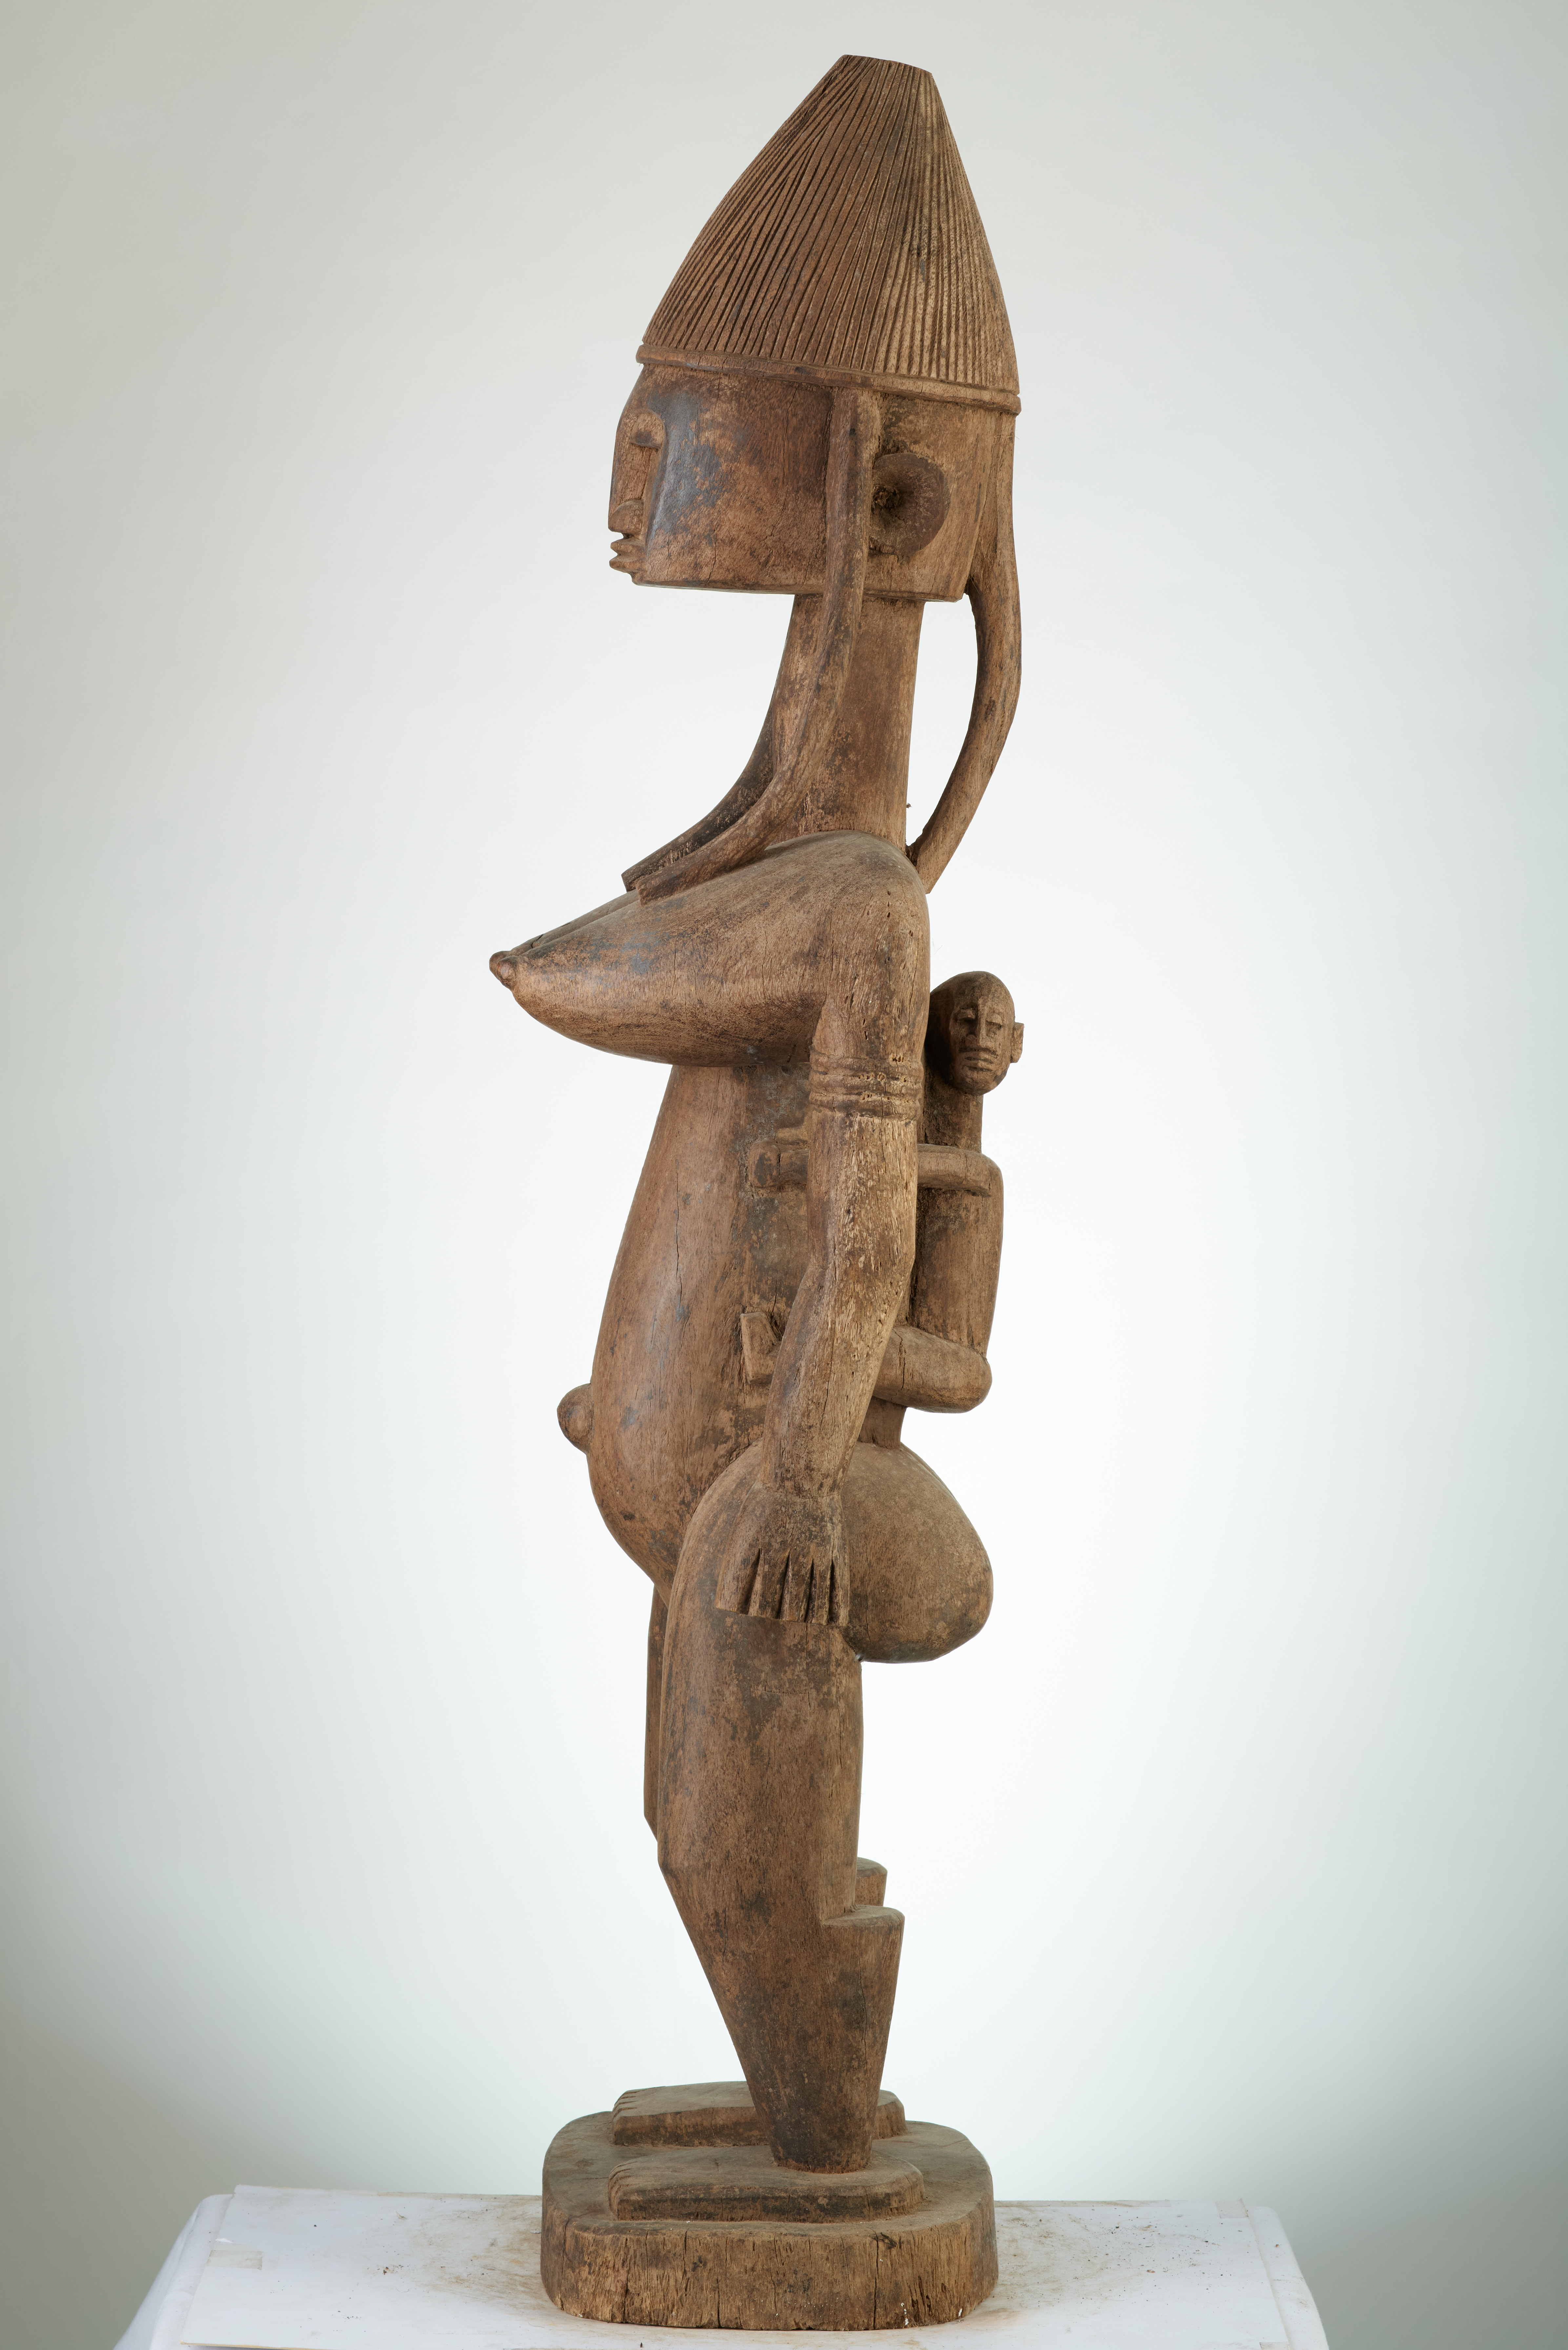 bambara, d`afrique : MALI, statuette bambara, masque ancien africain bambara, art du MALI - Art Africain, statue africaine, Masque africain, l`Afrique au travers de ses masques africains et de ces statuettes africaines. Masque africain en belgique, masque africain originaux. . Statue africaine de la tribu des bambara, provenant du MALI, 1881:Maternité Bambara .Ancêtre debout portant son enfant dans le dos, nommé Guandous ou appartenant à la societé GUAN H100cm.La coiffure en forme de crête et une forte poitrinne 1ère moitié 20eme sc.(Sibiry)

Rechtstaand Bambara  moederschap.Een voorouder dat haar kind draagt op haar rug Guandousou genaamd.Ze maakt deel uit van de GUAN societeit.Ze heeft een  mooie haartooi in kamvorm en grote borsten. 1ste helft 20ste eeuw.(Kol.SIBIRY) . art,culture,masque,statue,statuette,pot,ivoire,exposition,expo,masque original,masques,statues,statuettes,pots,expositions,expo,masques originaux,collectionneur d`art,art africain,culture africaine,masque africain,statue africaine,statuette africaine,pot africain,ivoire africain,exposition africain,expo africain,masque origina africainl,masques africains,statues africaines,statuettes africaines,pots africains,expositions africaines,expo africaines,masques originaux  africains,collectionneur d`art africain